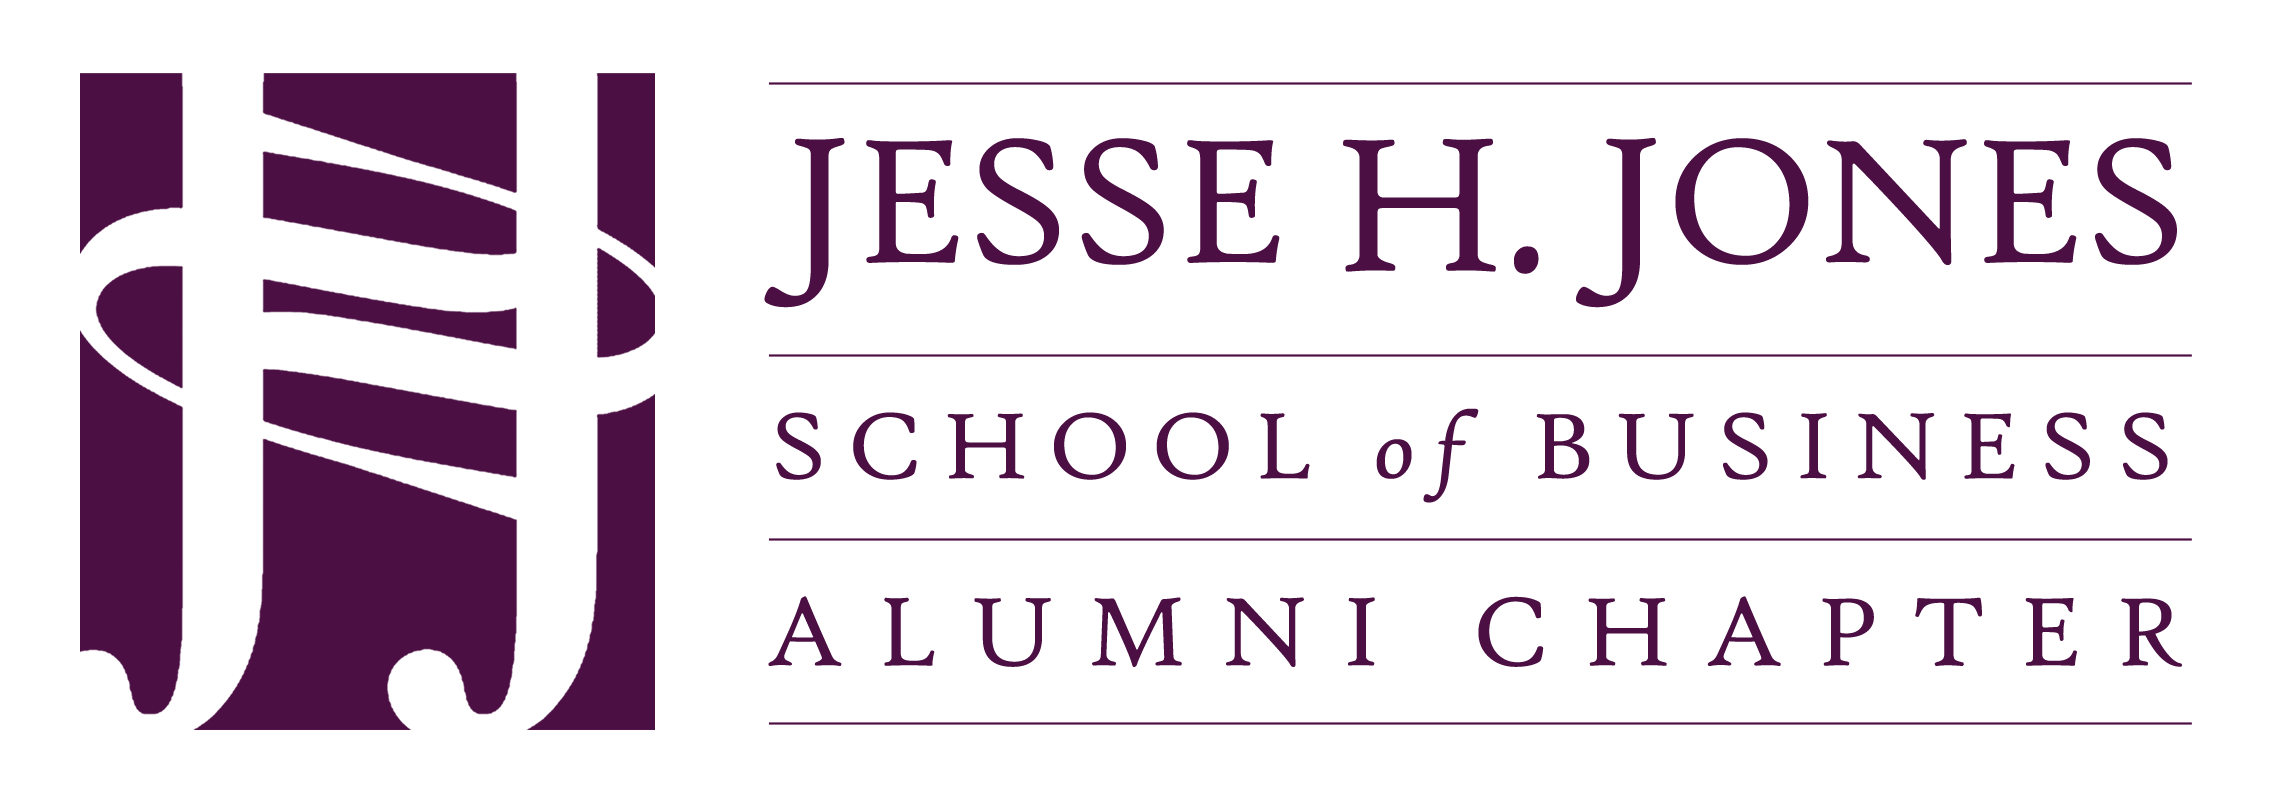 JHJ school of business Alumni Chapter logo